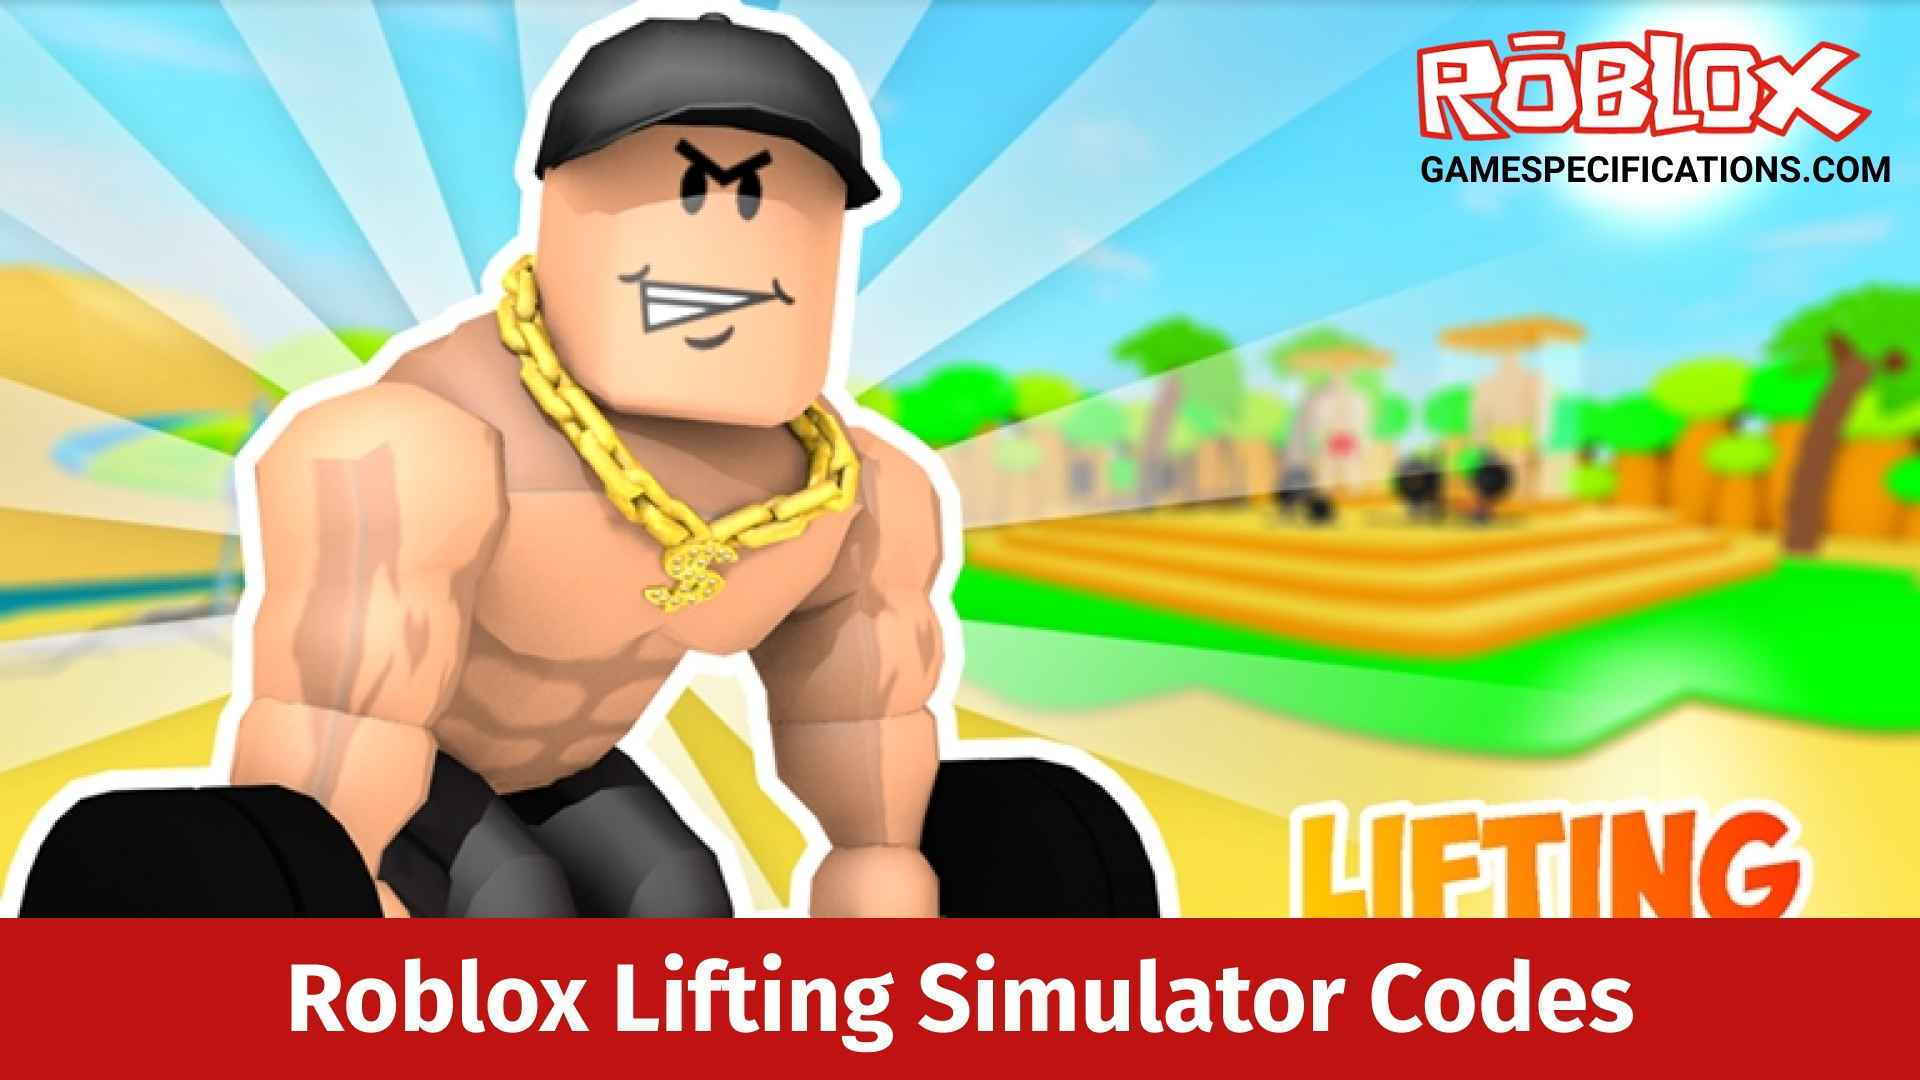 Roblox Dominus Lifting Simulator Codes Archives Game Specifications - roblox codes dominus lifting simulator